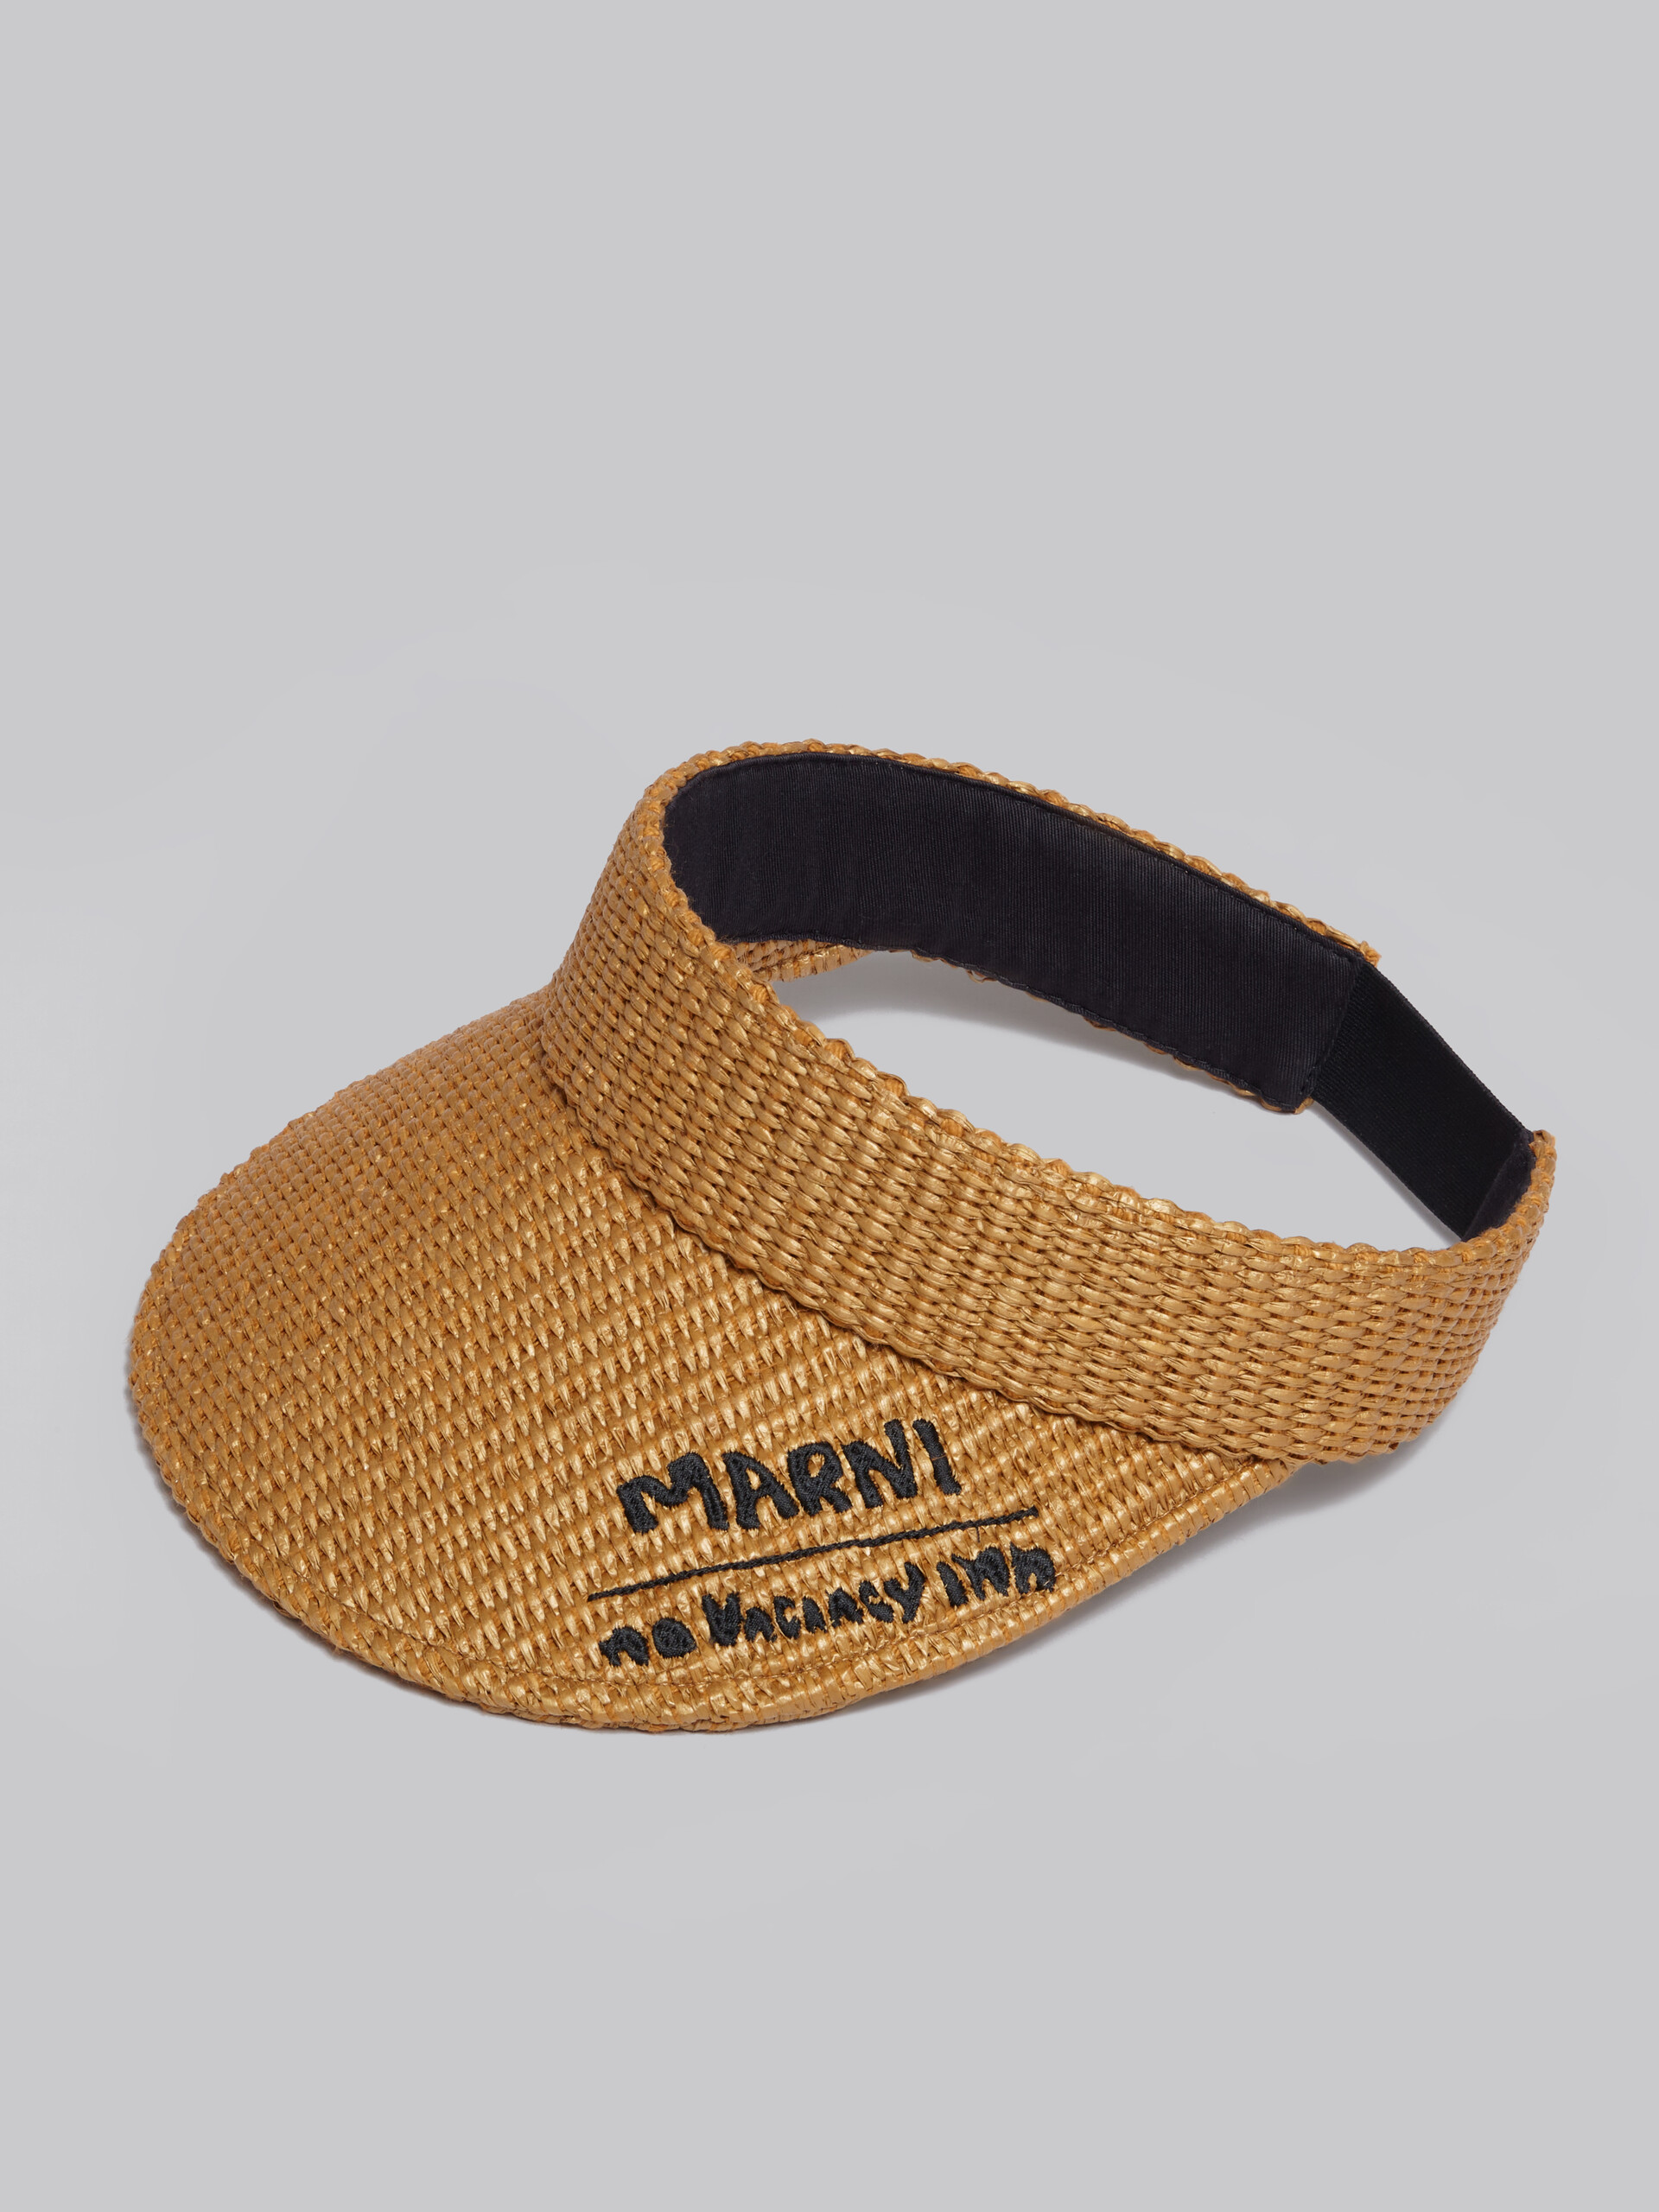 Marni x No Vacancy Inn - Caramel visor in raffia fabric - Hats - Image 4